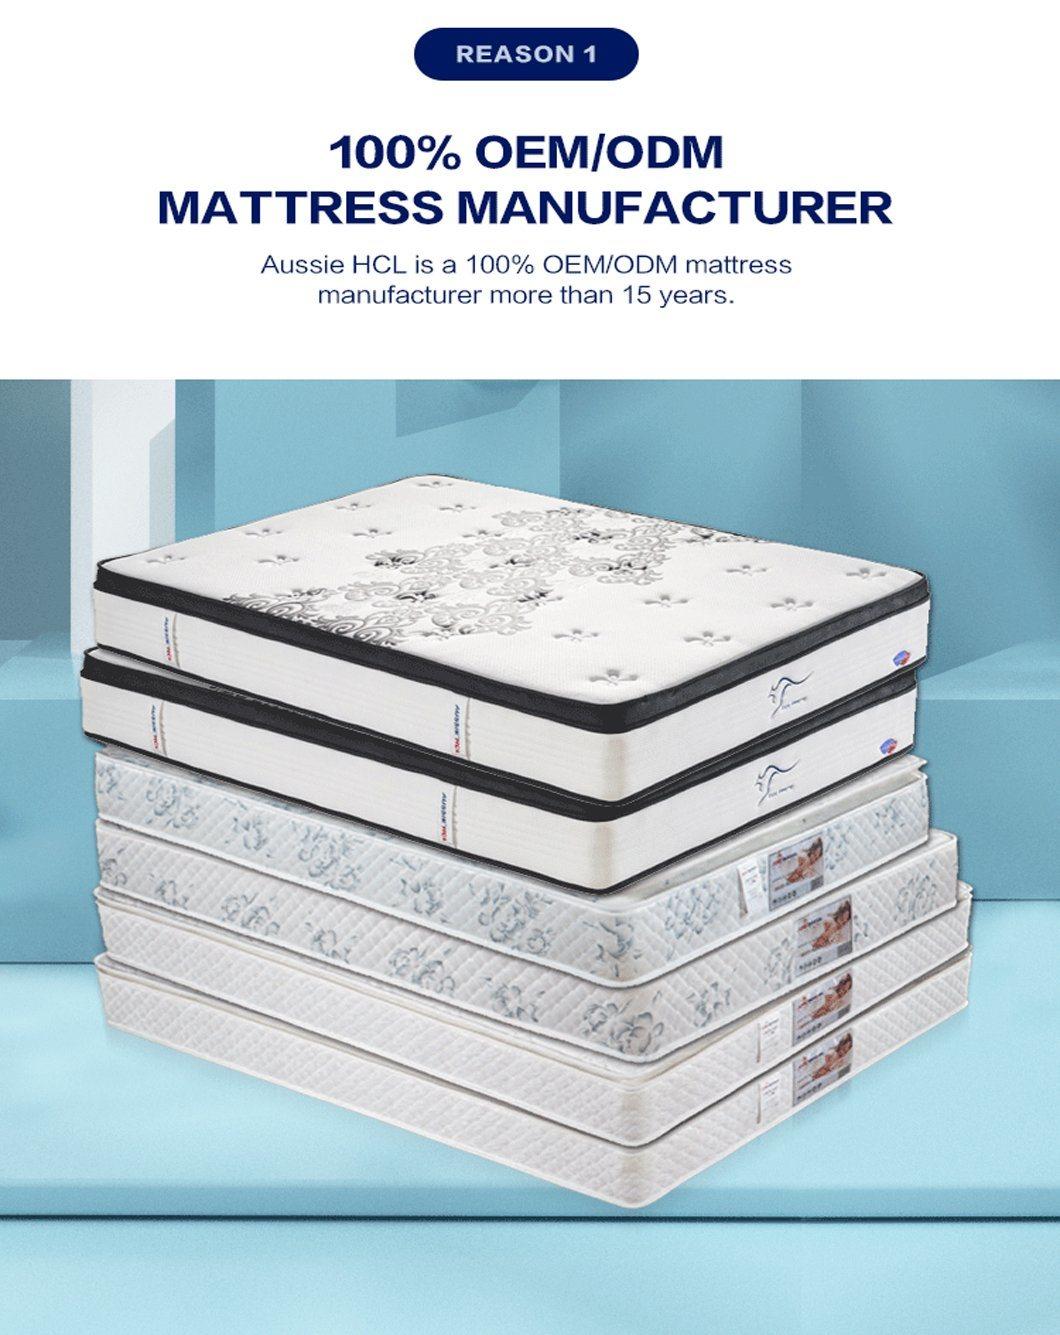 China Wholesale Sleep Well Gel Memory Korean Mattresses Quality Single Double Highd Density Rebound Foam Mattress Bed